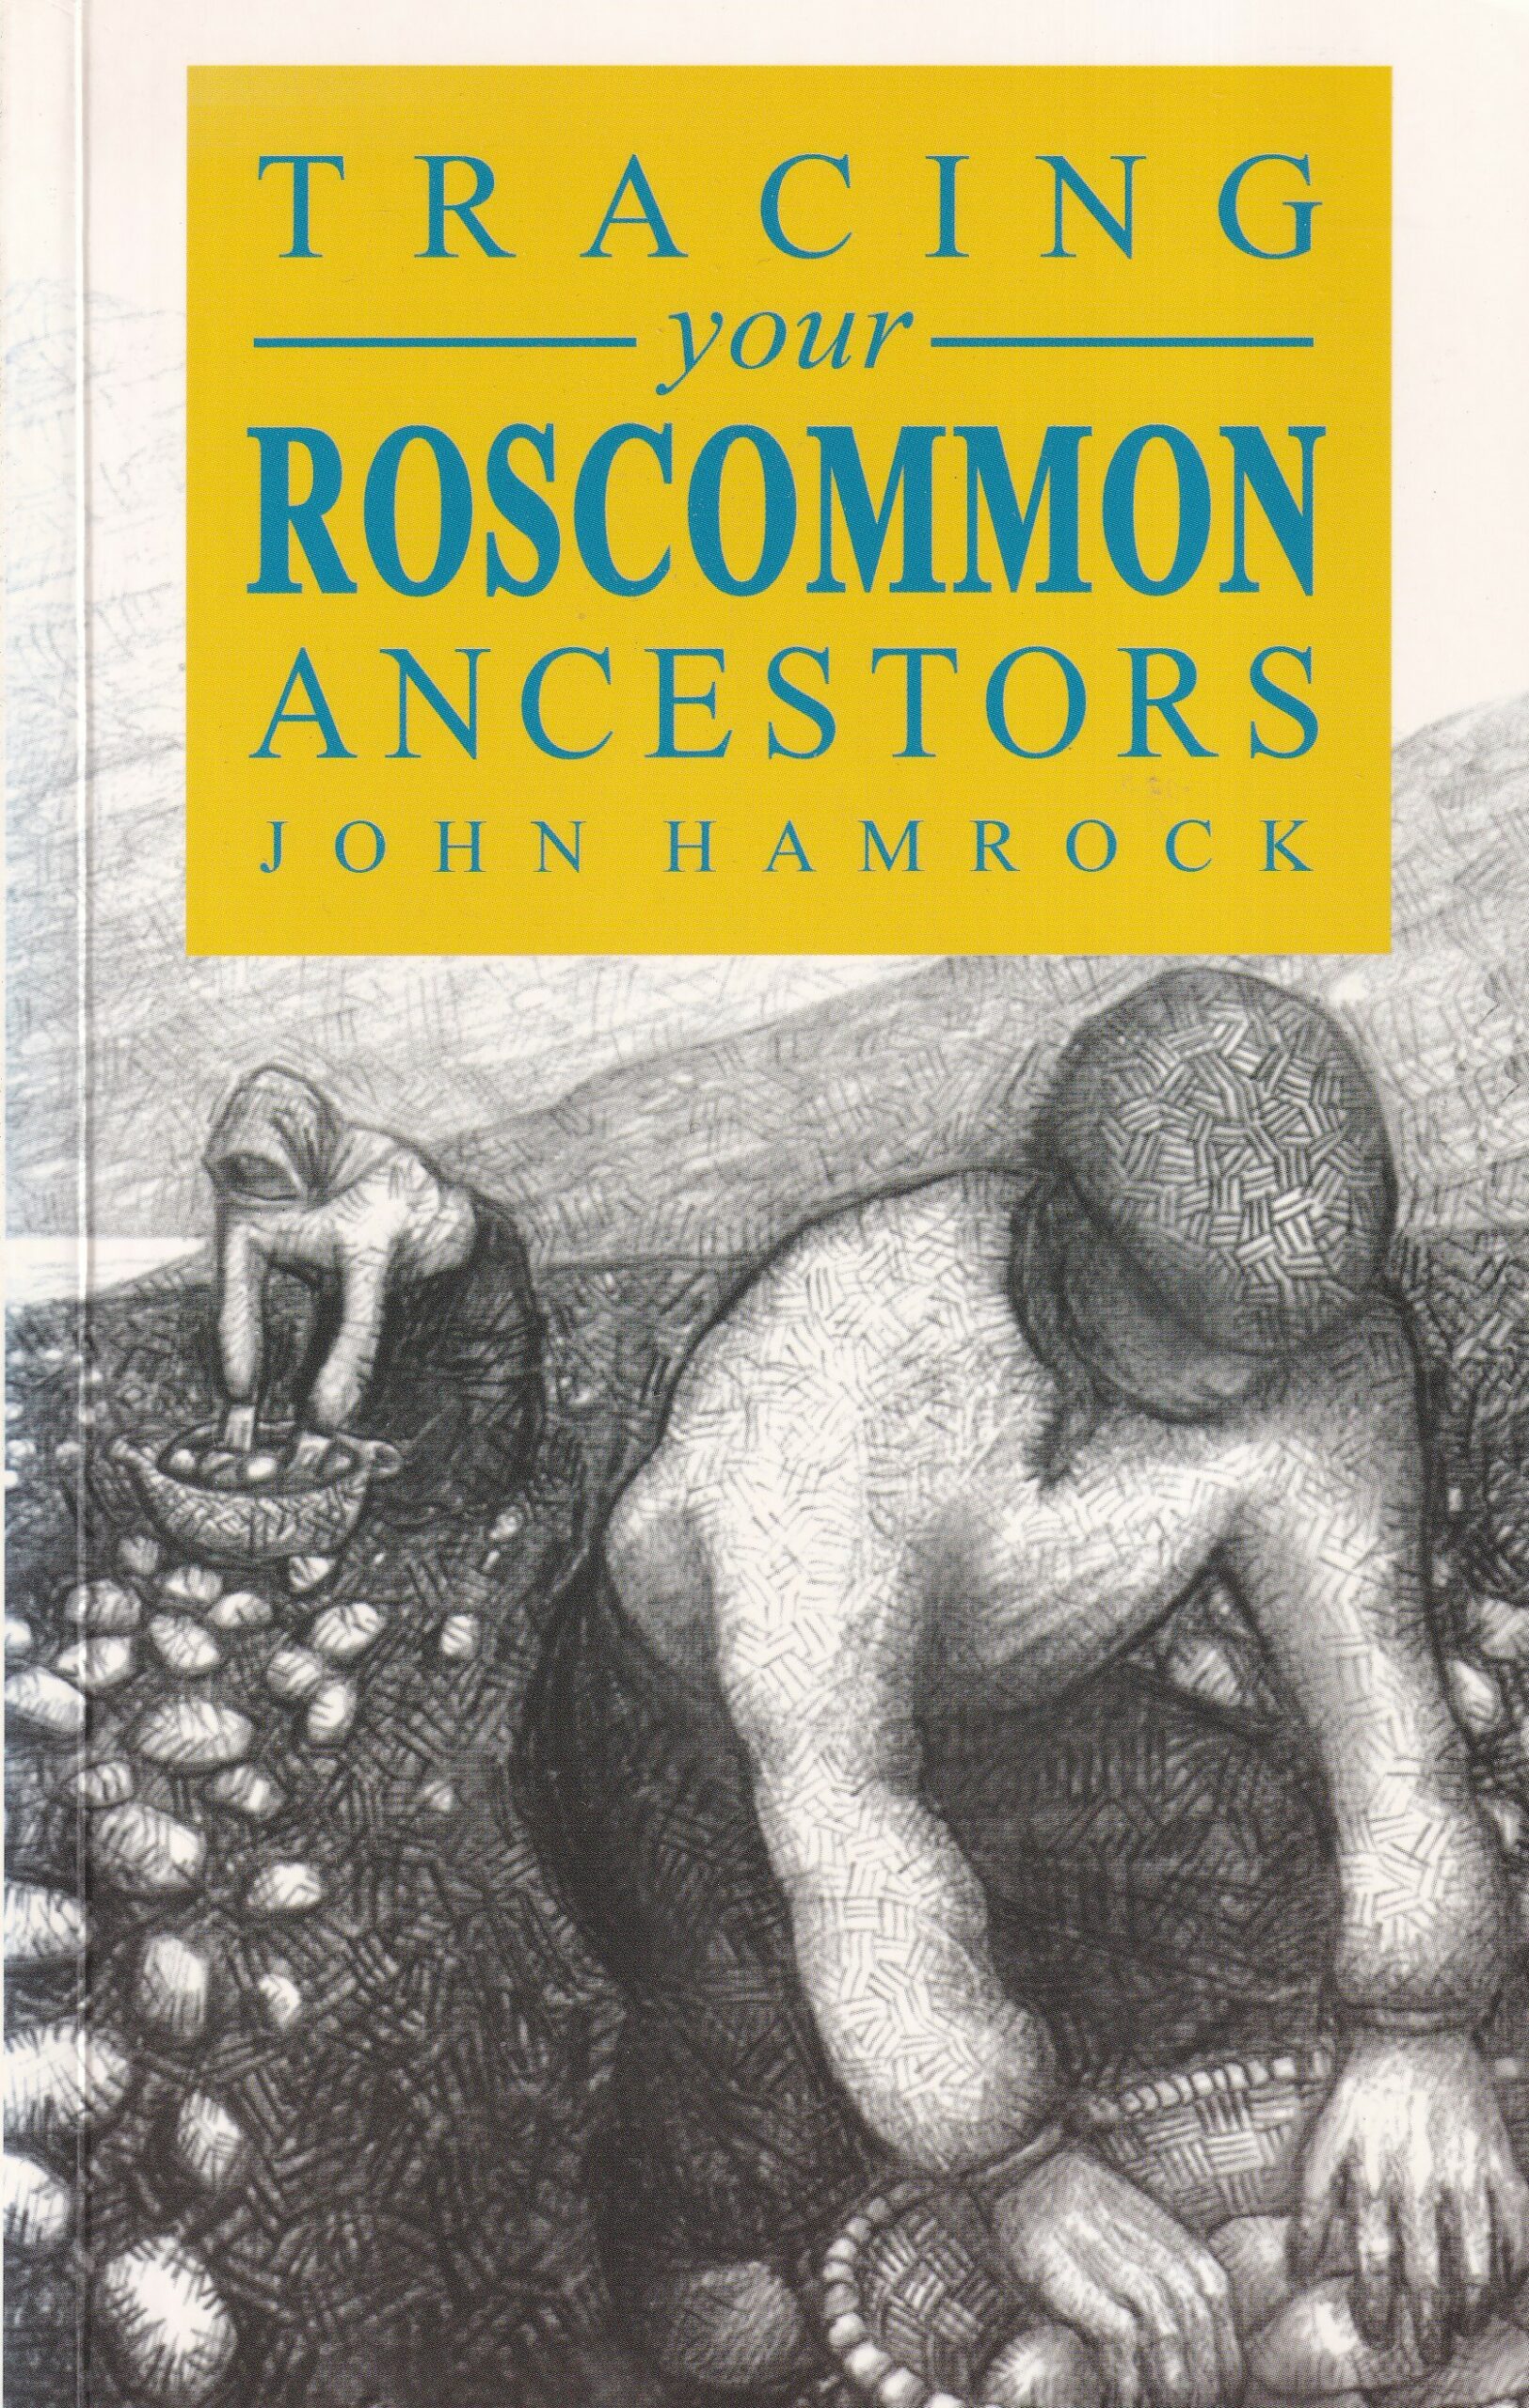 Tracing your Roscommon Ancestors by John Hamrock